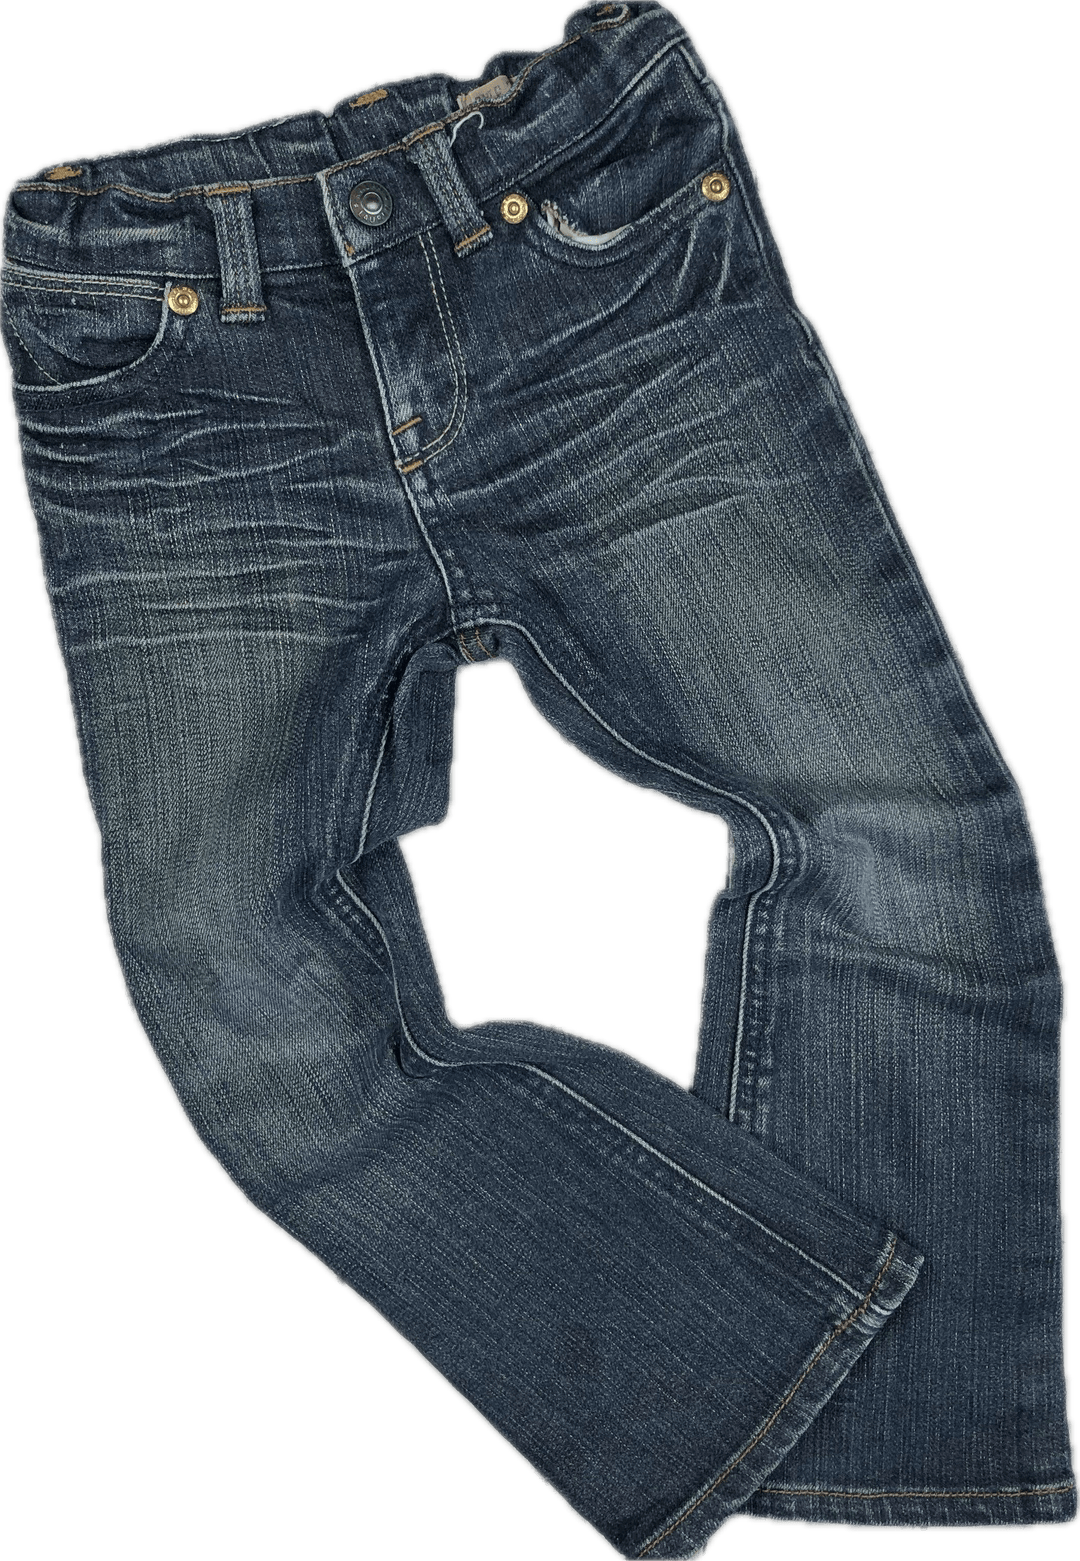 Ralph Lauren Stretch Denim Jeans - Size 3T - Jean Pool